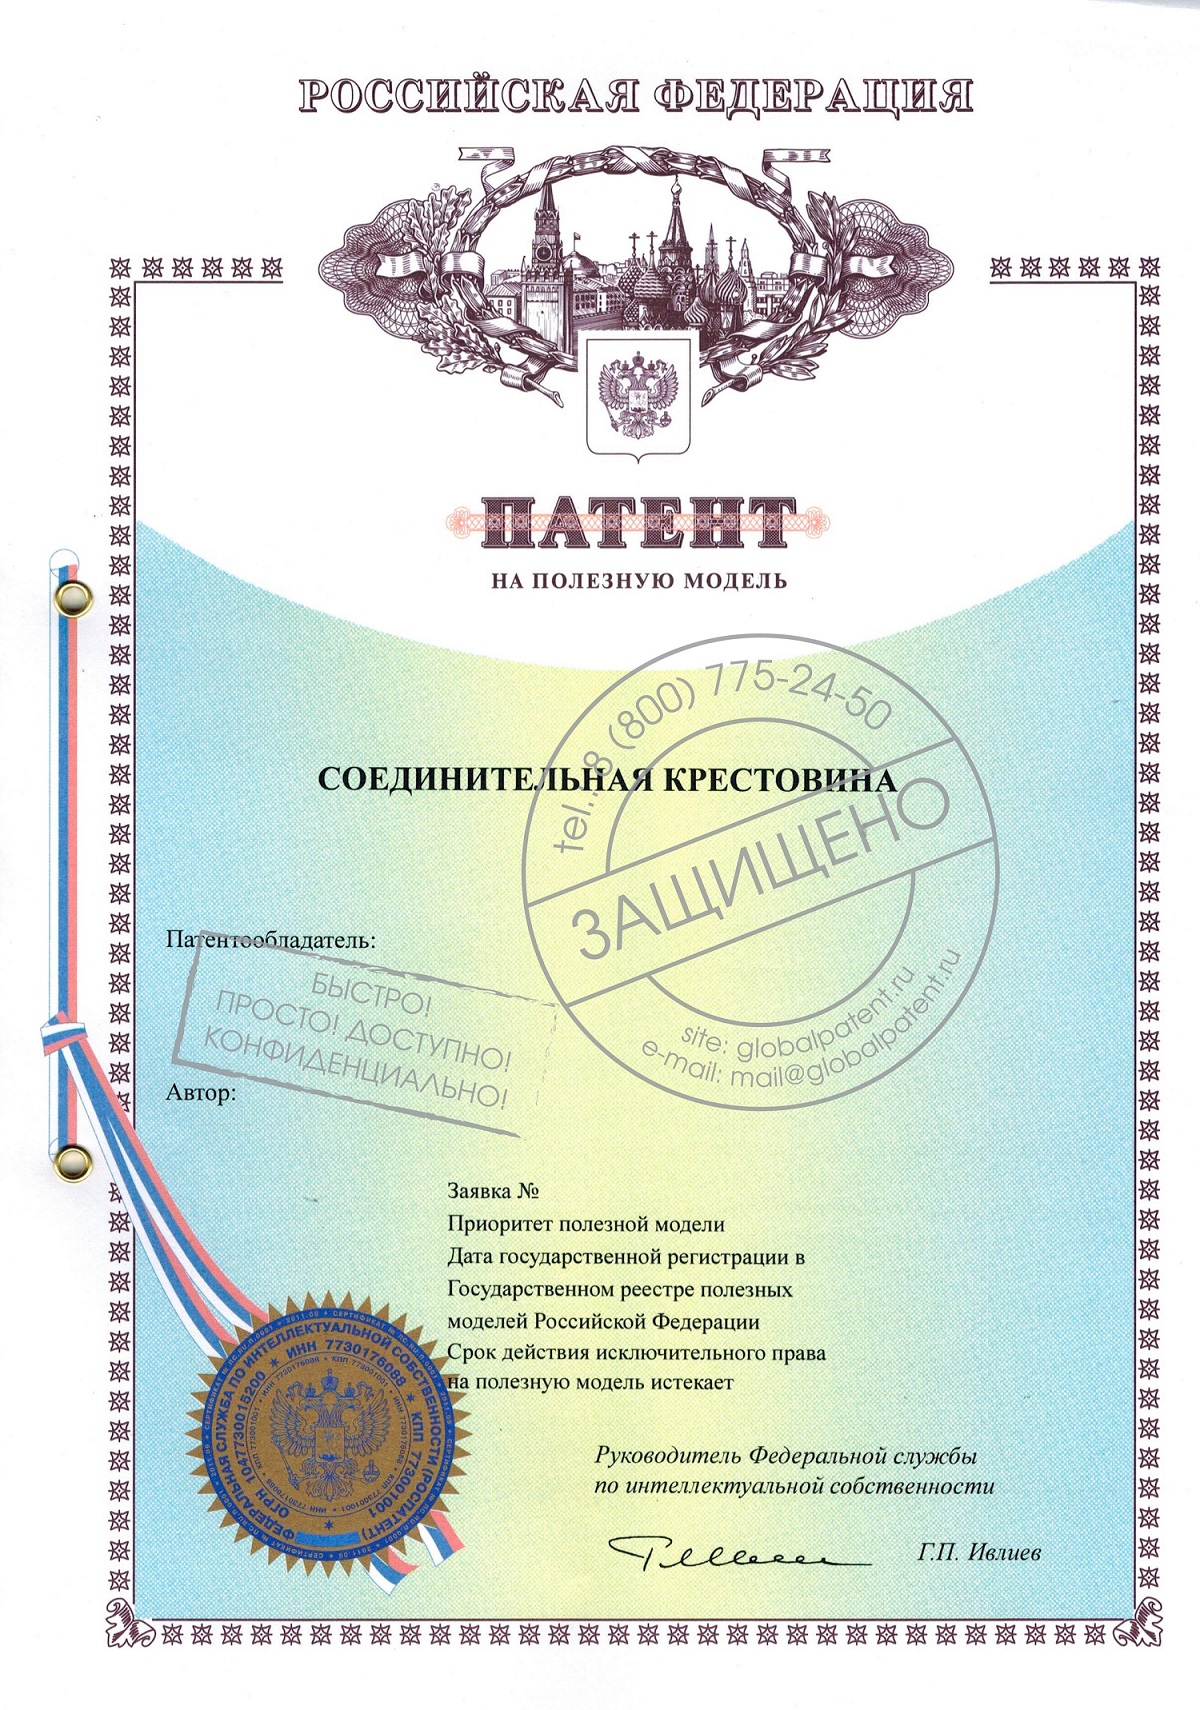 patent pm 15092020 ID3044